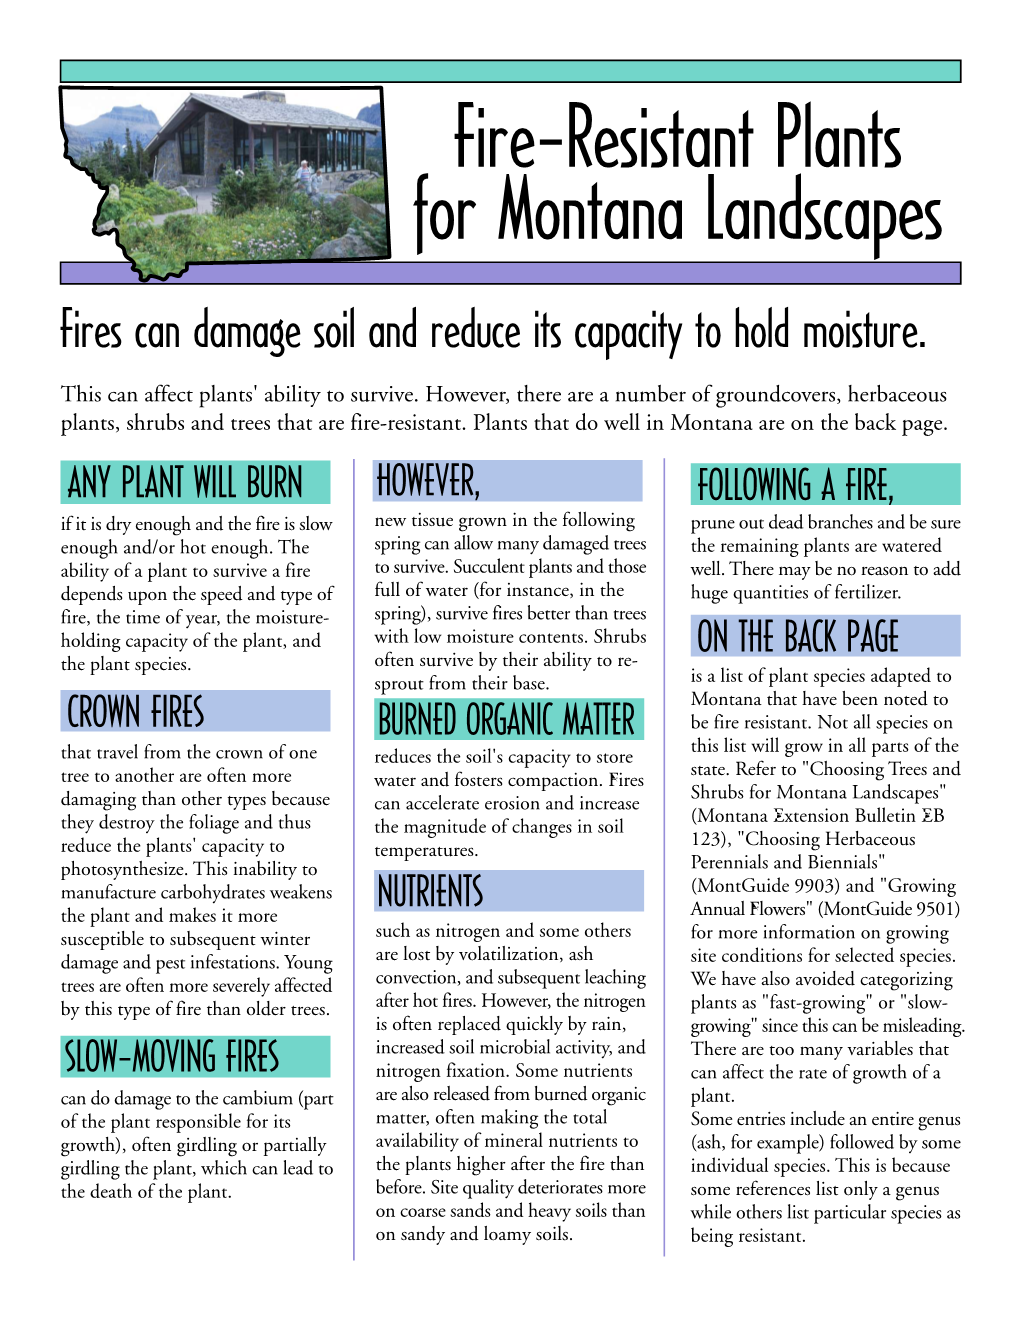 Fire-Resistant Plants for Montana Landscapes